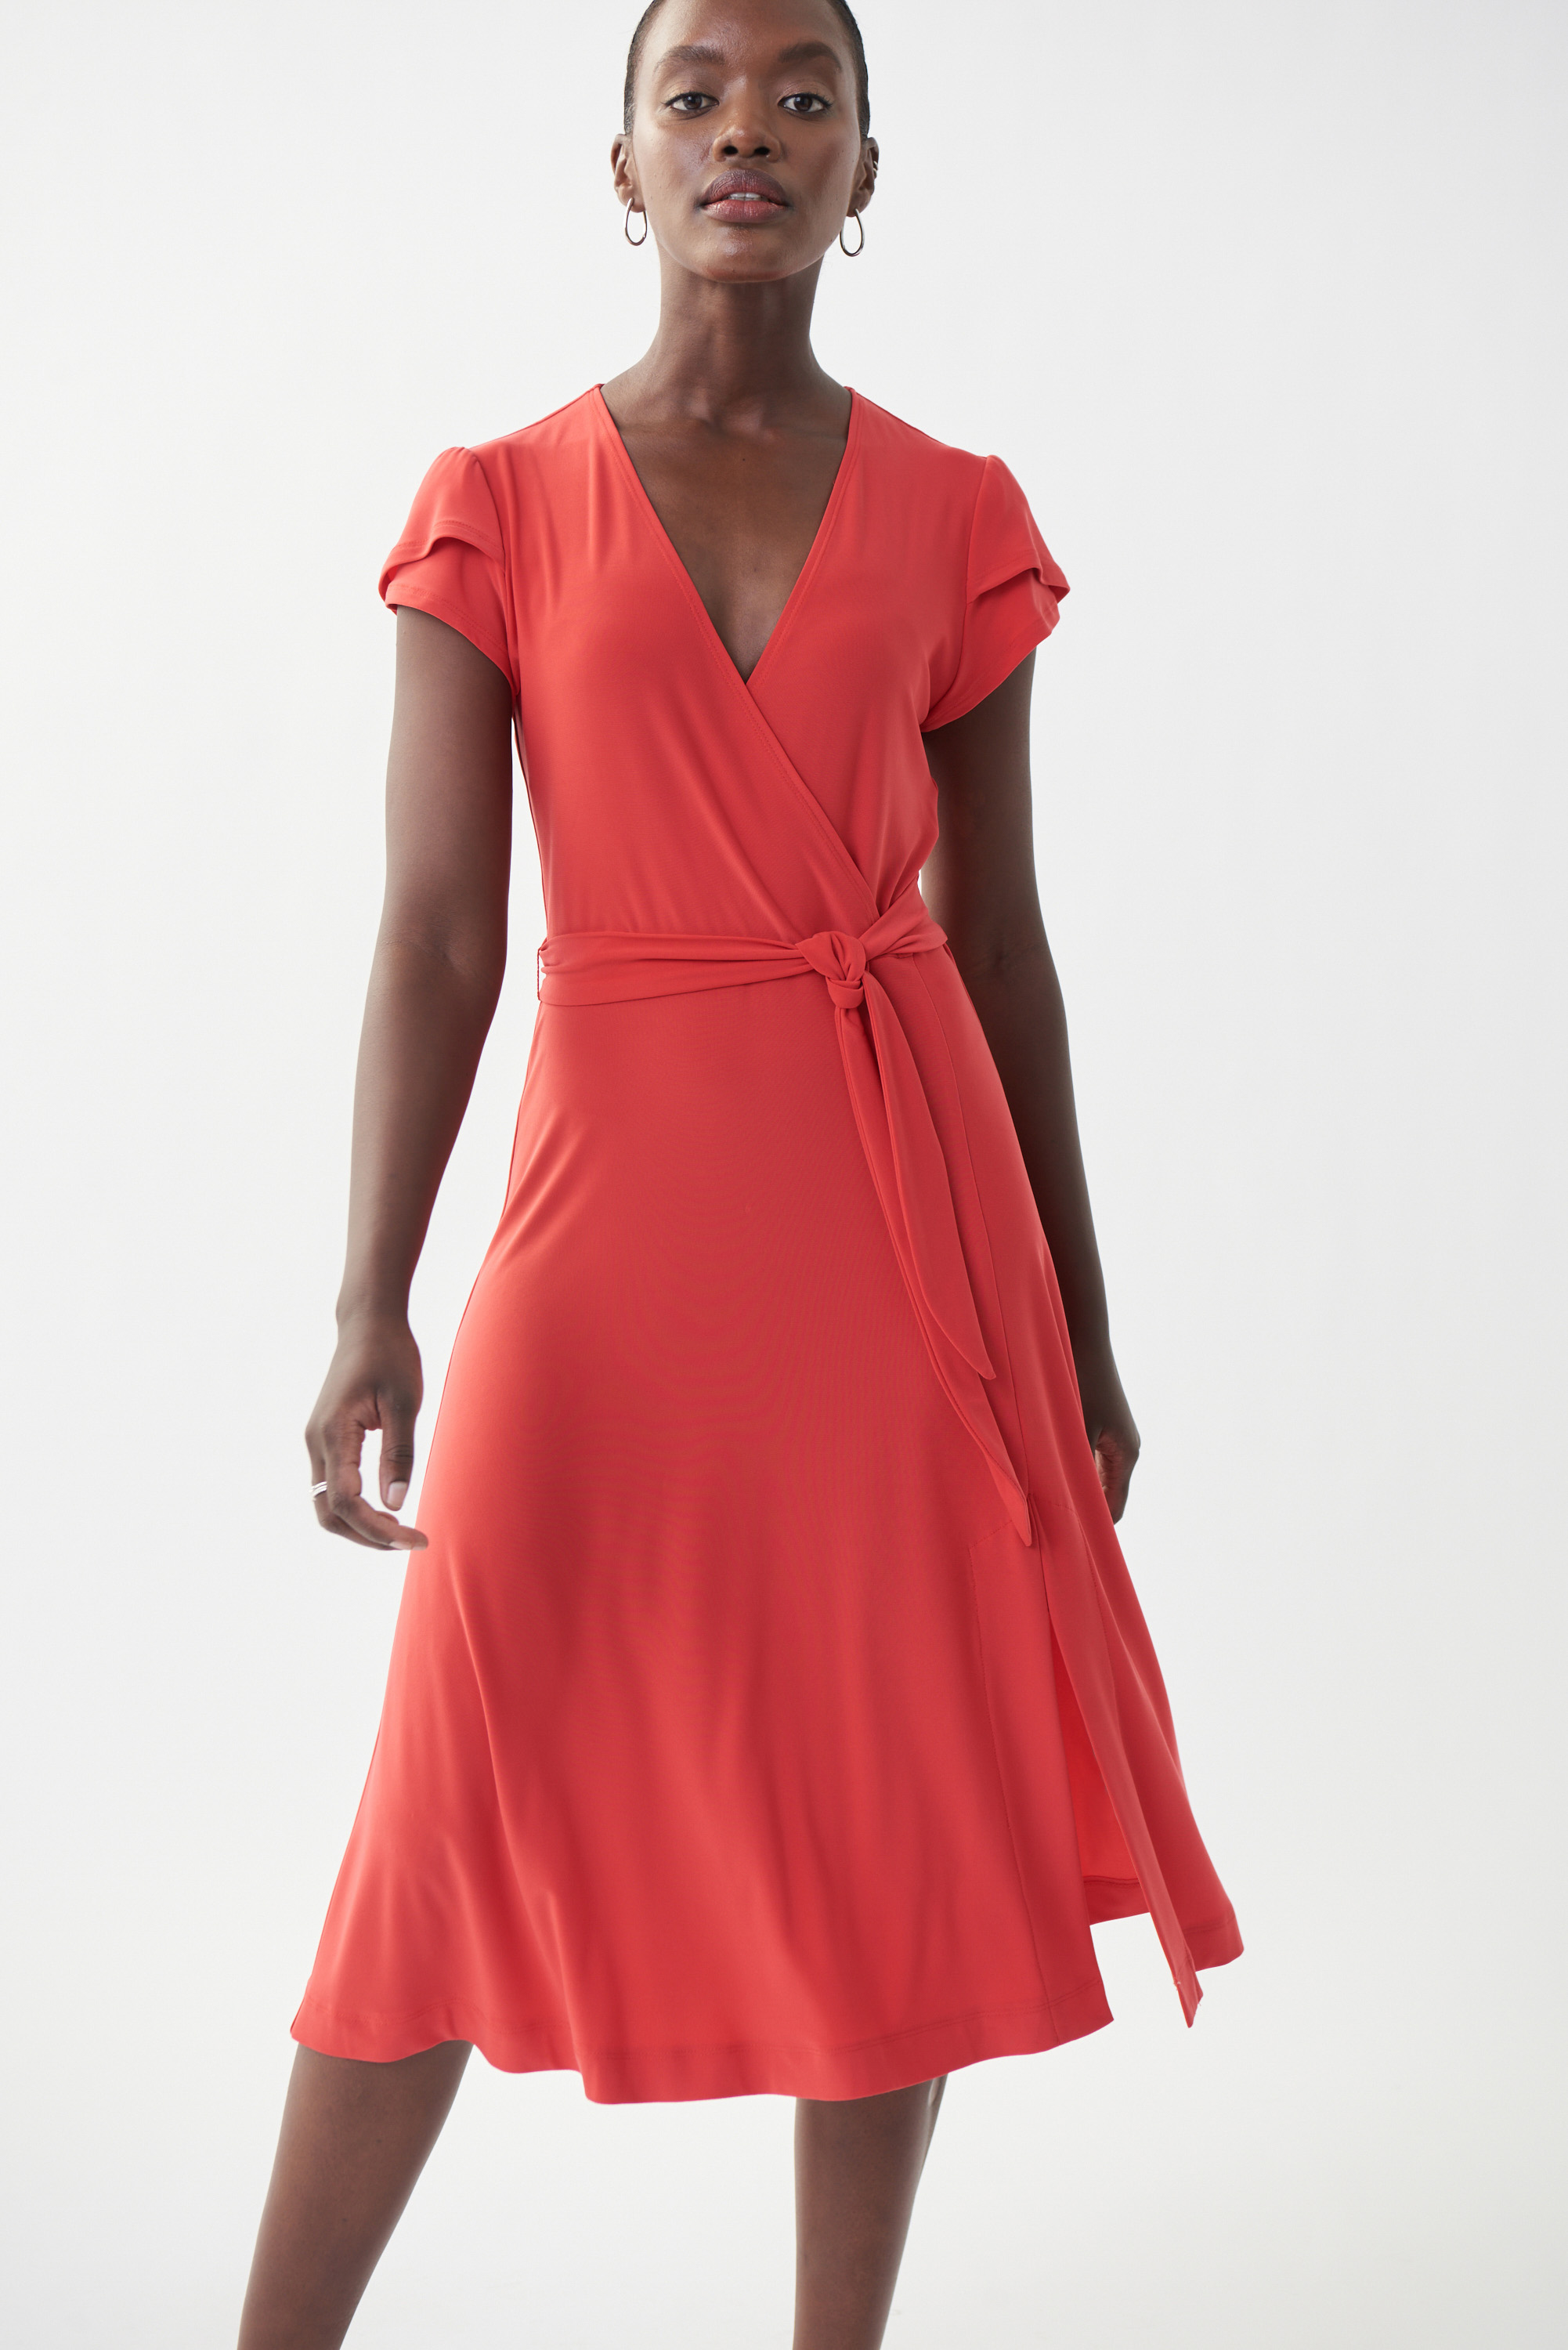 Buy PoshBery red Square Neck midi Dress at Amazon.in